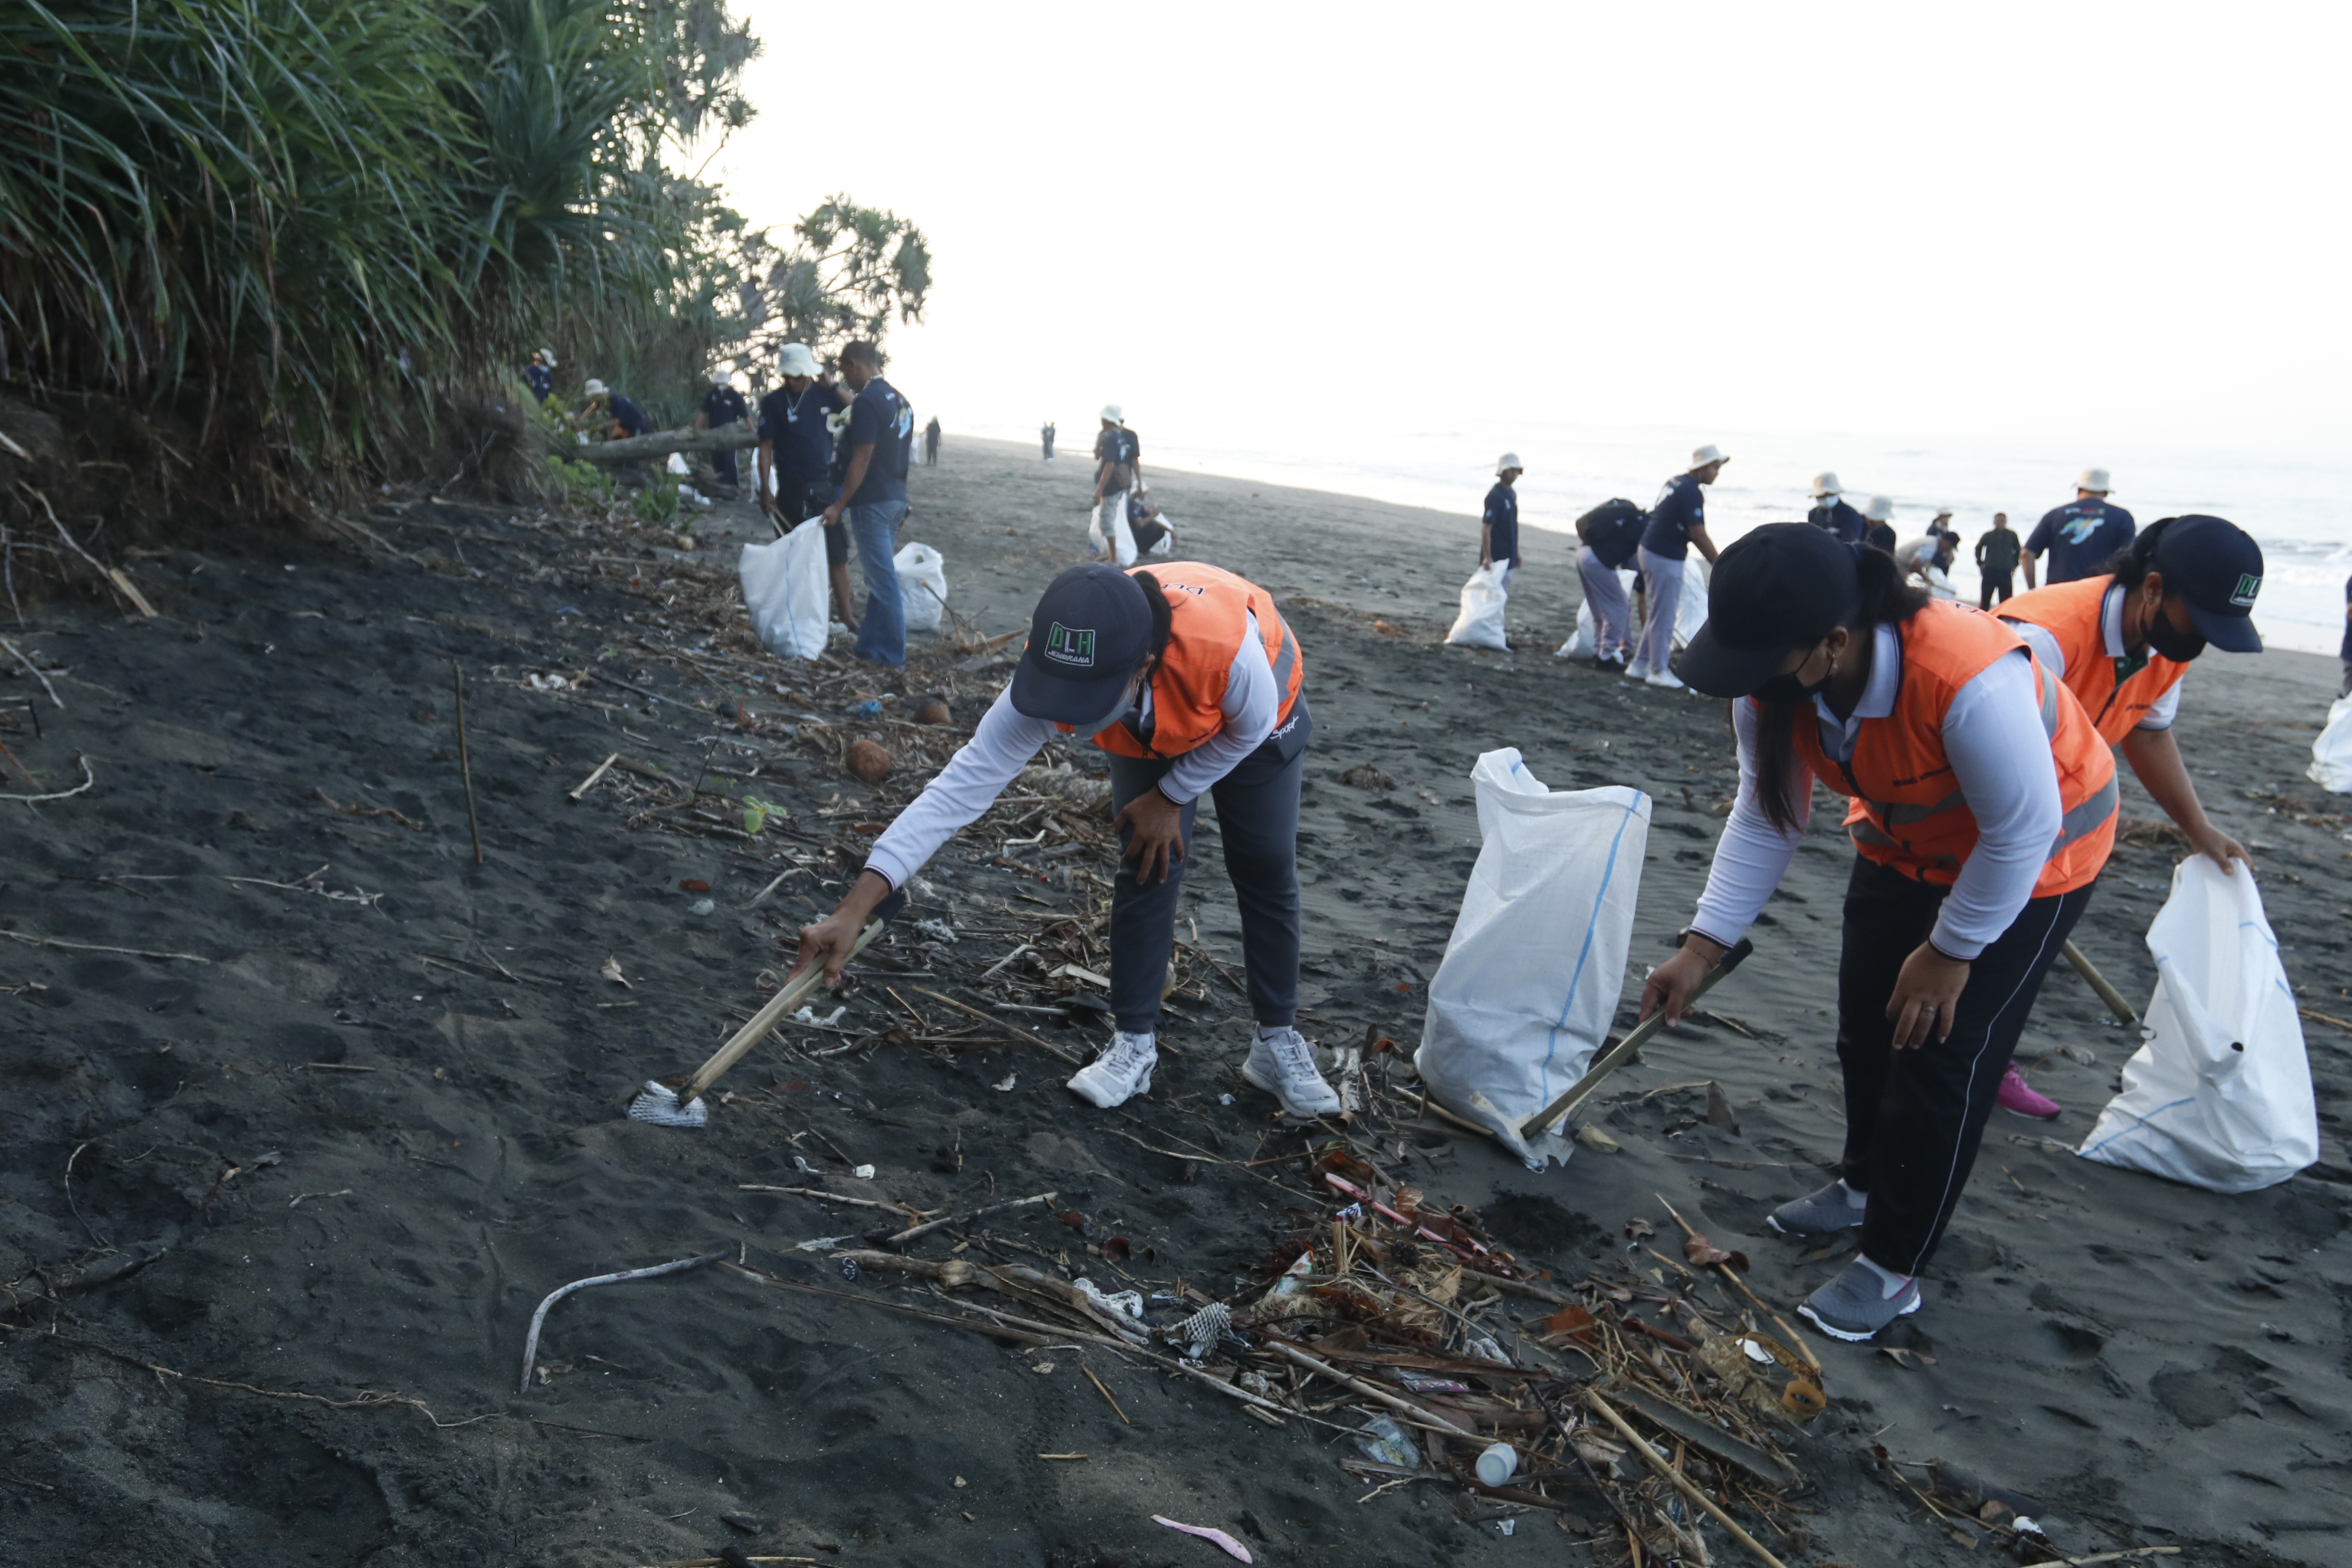 Gerakan Bersih Pantai dan Laut/GBPL dalam rangka Coral Triangle Day di Pantai Perancak - Bali (29/7).